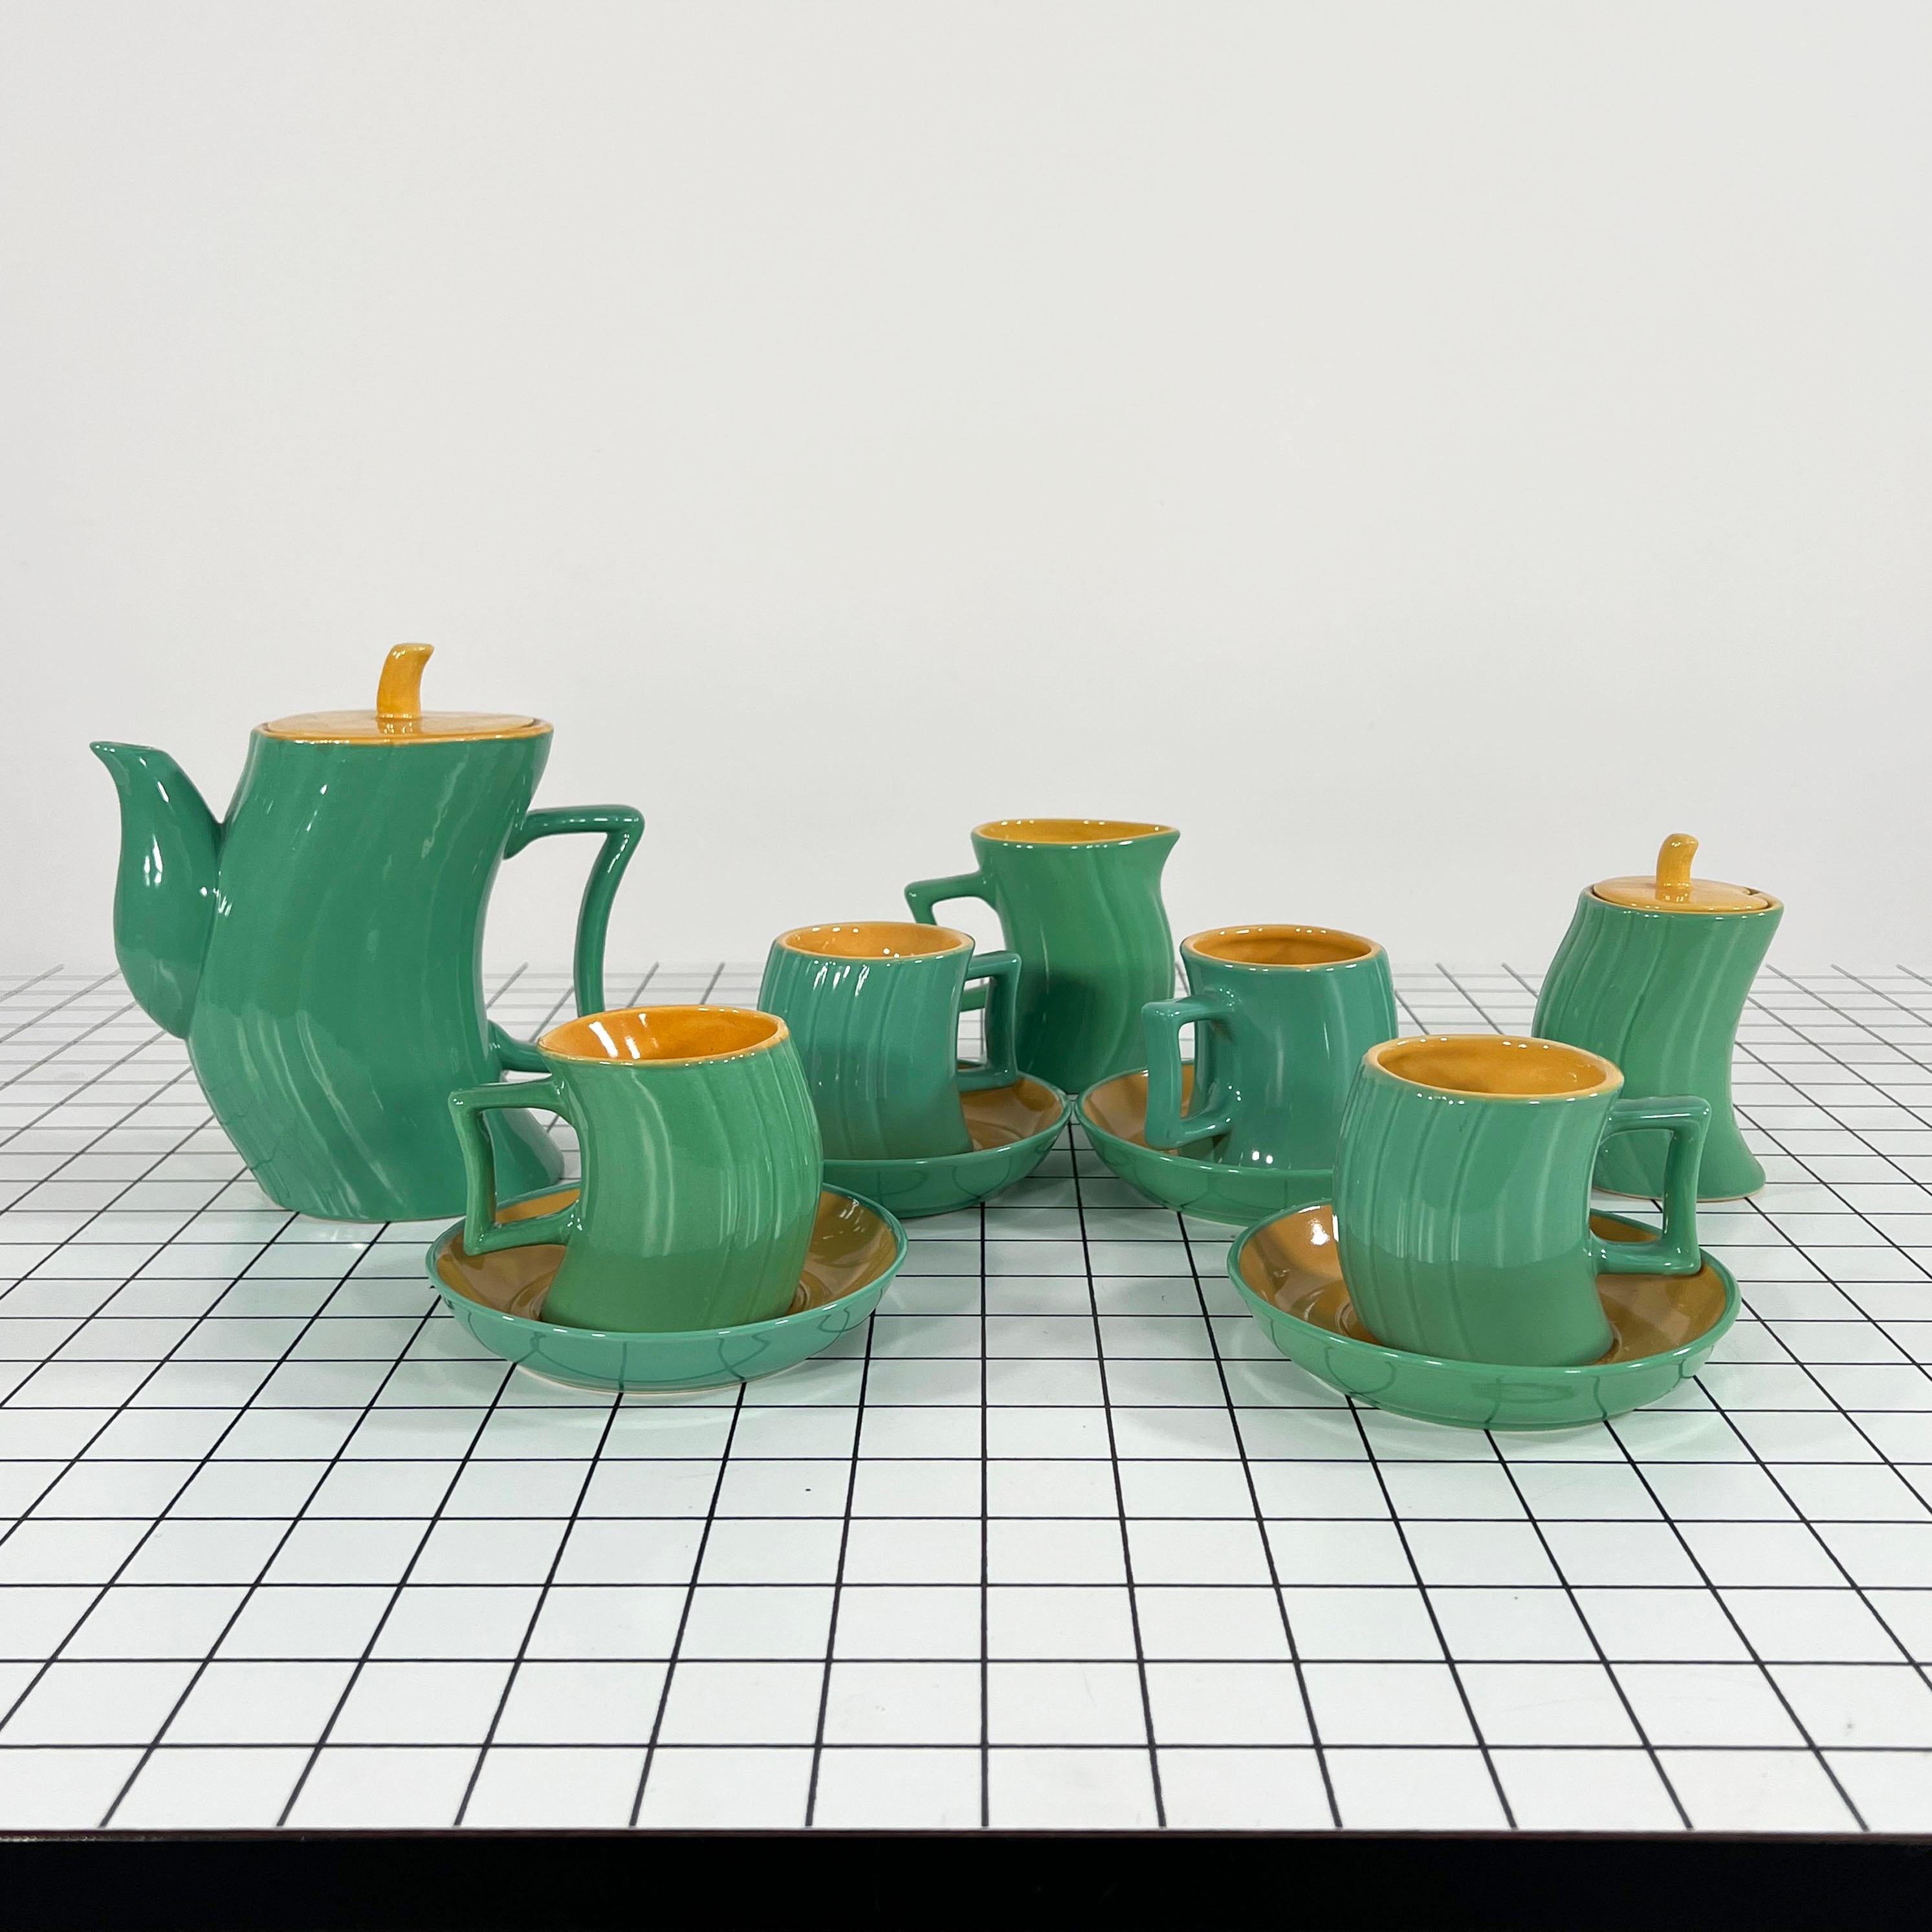 2 sets available - Price is per set
Designer - Massimo Iosa Ghini
Producer - Naj Oleari
Design Period - Eighties
Measurements - Width 16 cm x Depth 9 cm x Height 18 cm (Teapot) 
Materials - Ceramic
Color - Green, Yellow

Condition - Good